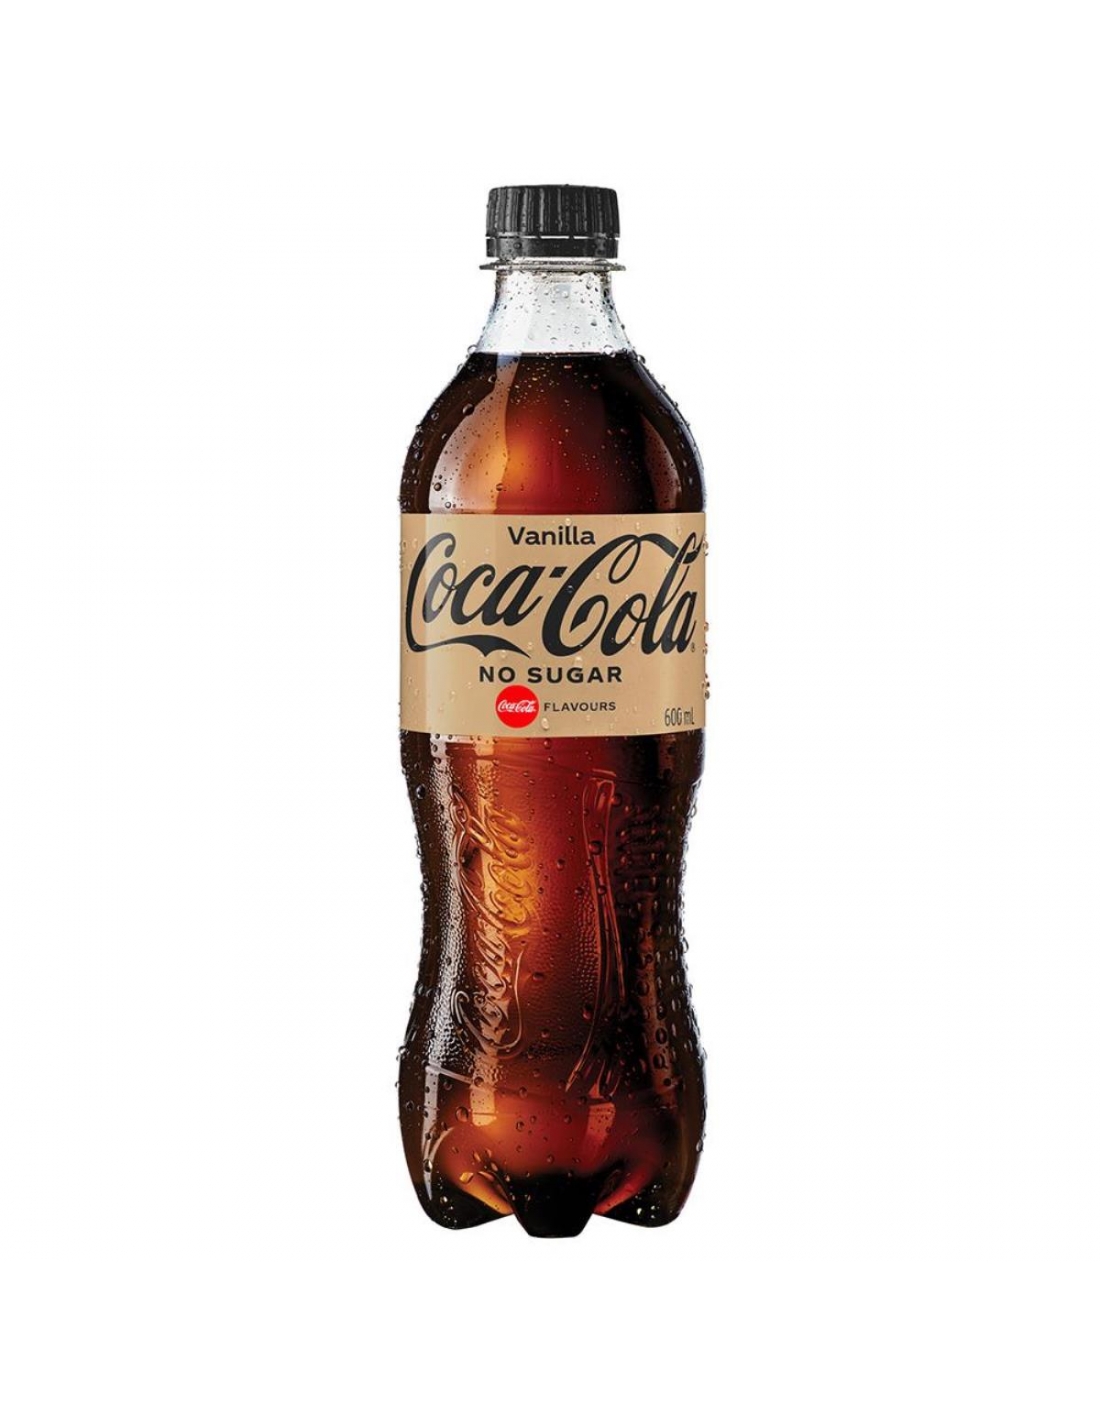 Coca cola vaniglia no zucchero 600 ml x 24